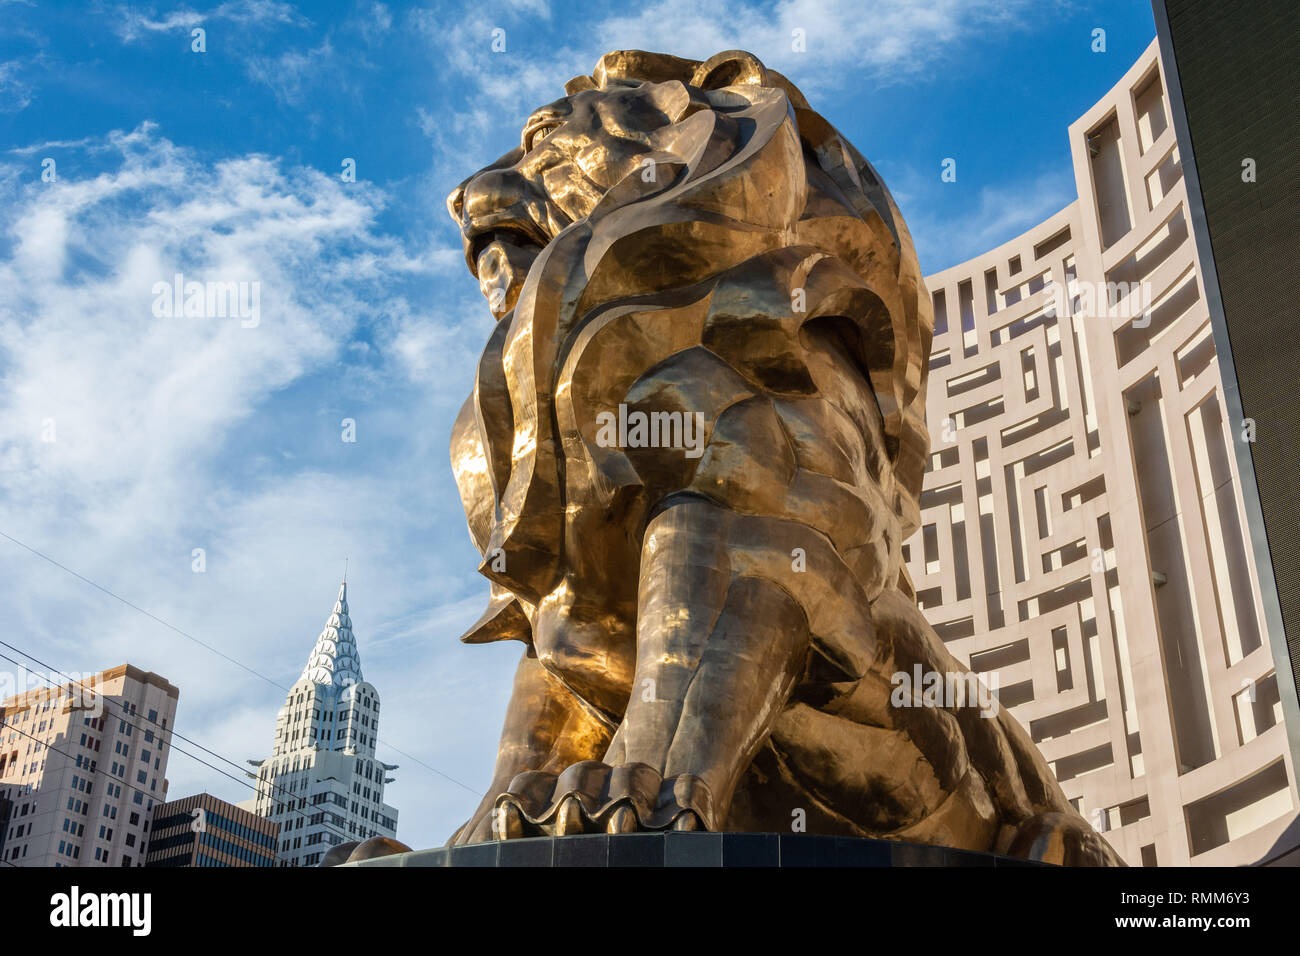 Las Vegas, Nevada, Stati Uniti d'America - 11 gennaio 2017. Statua di Leo, il leone MGM, di fronte al MGM Grand Hotel e Casinò di Las Vegas NV. Foto Stock